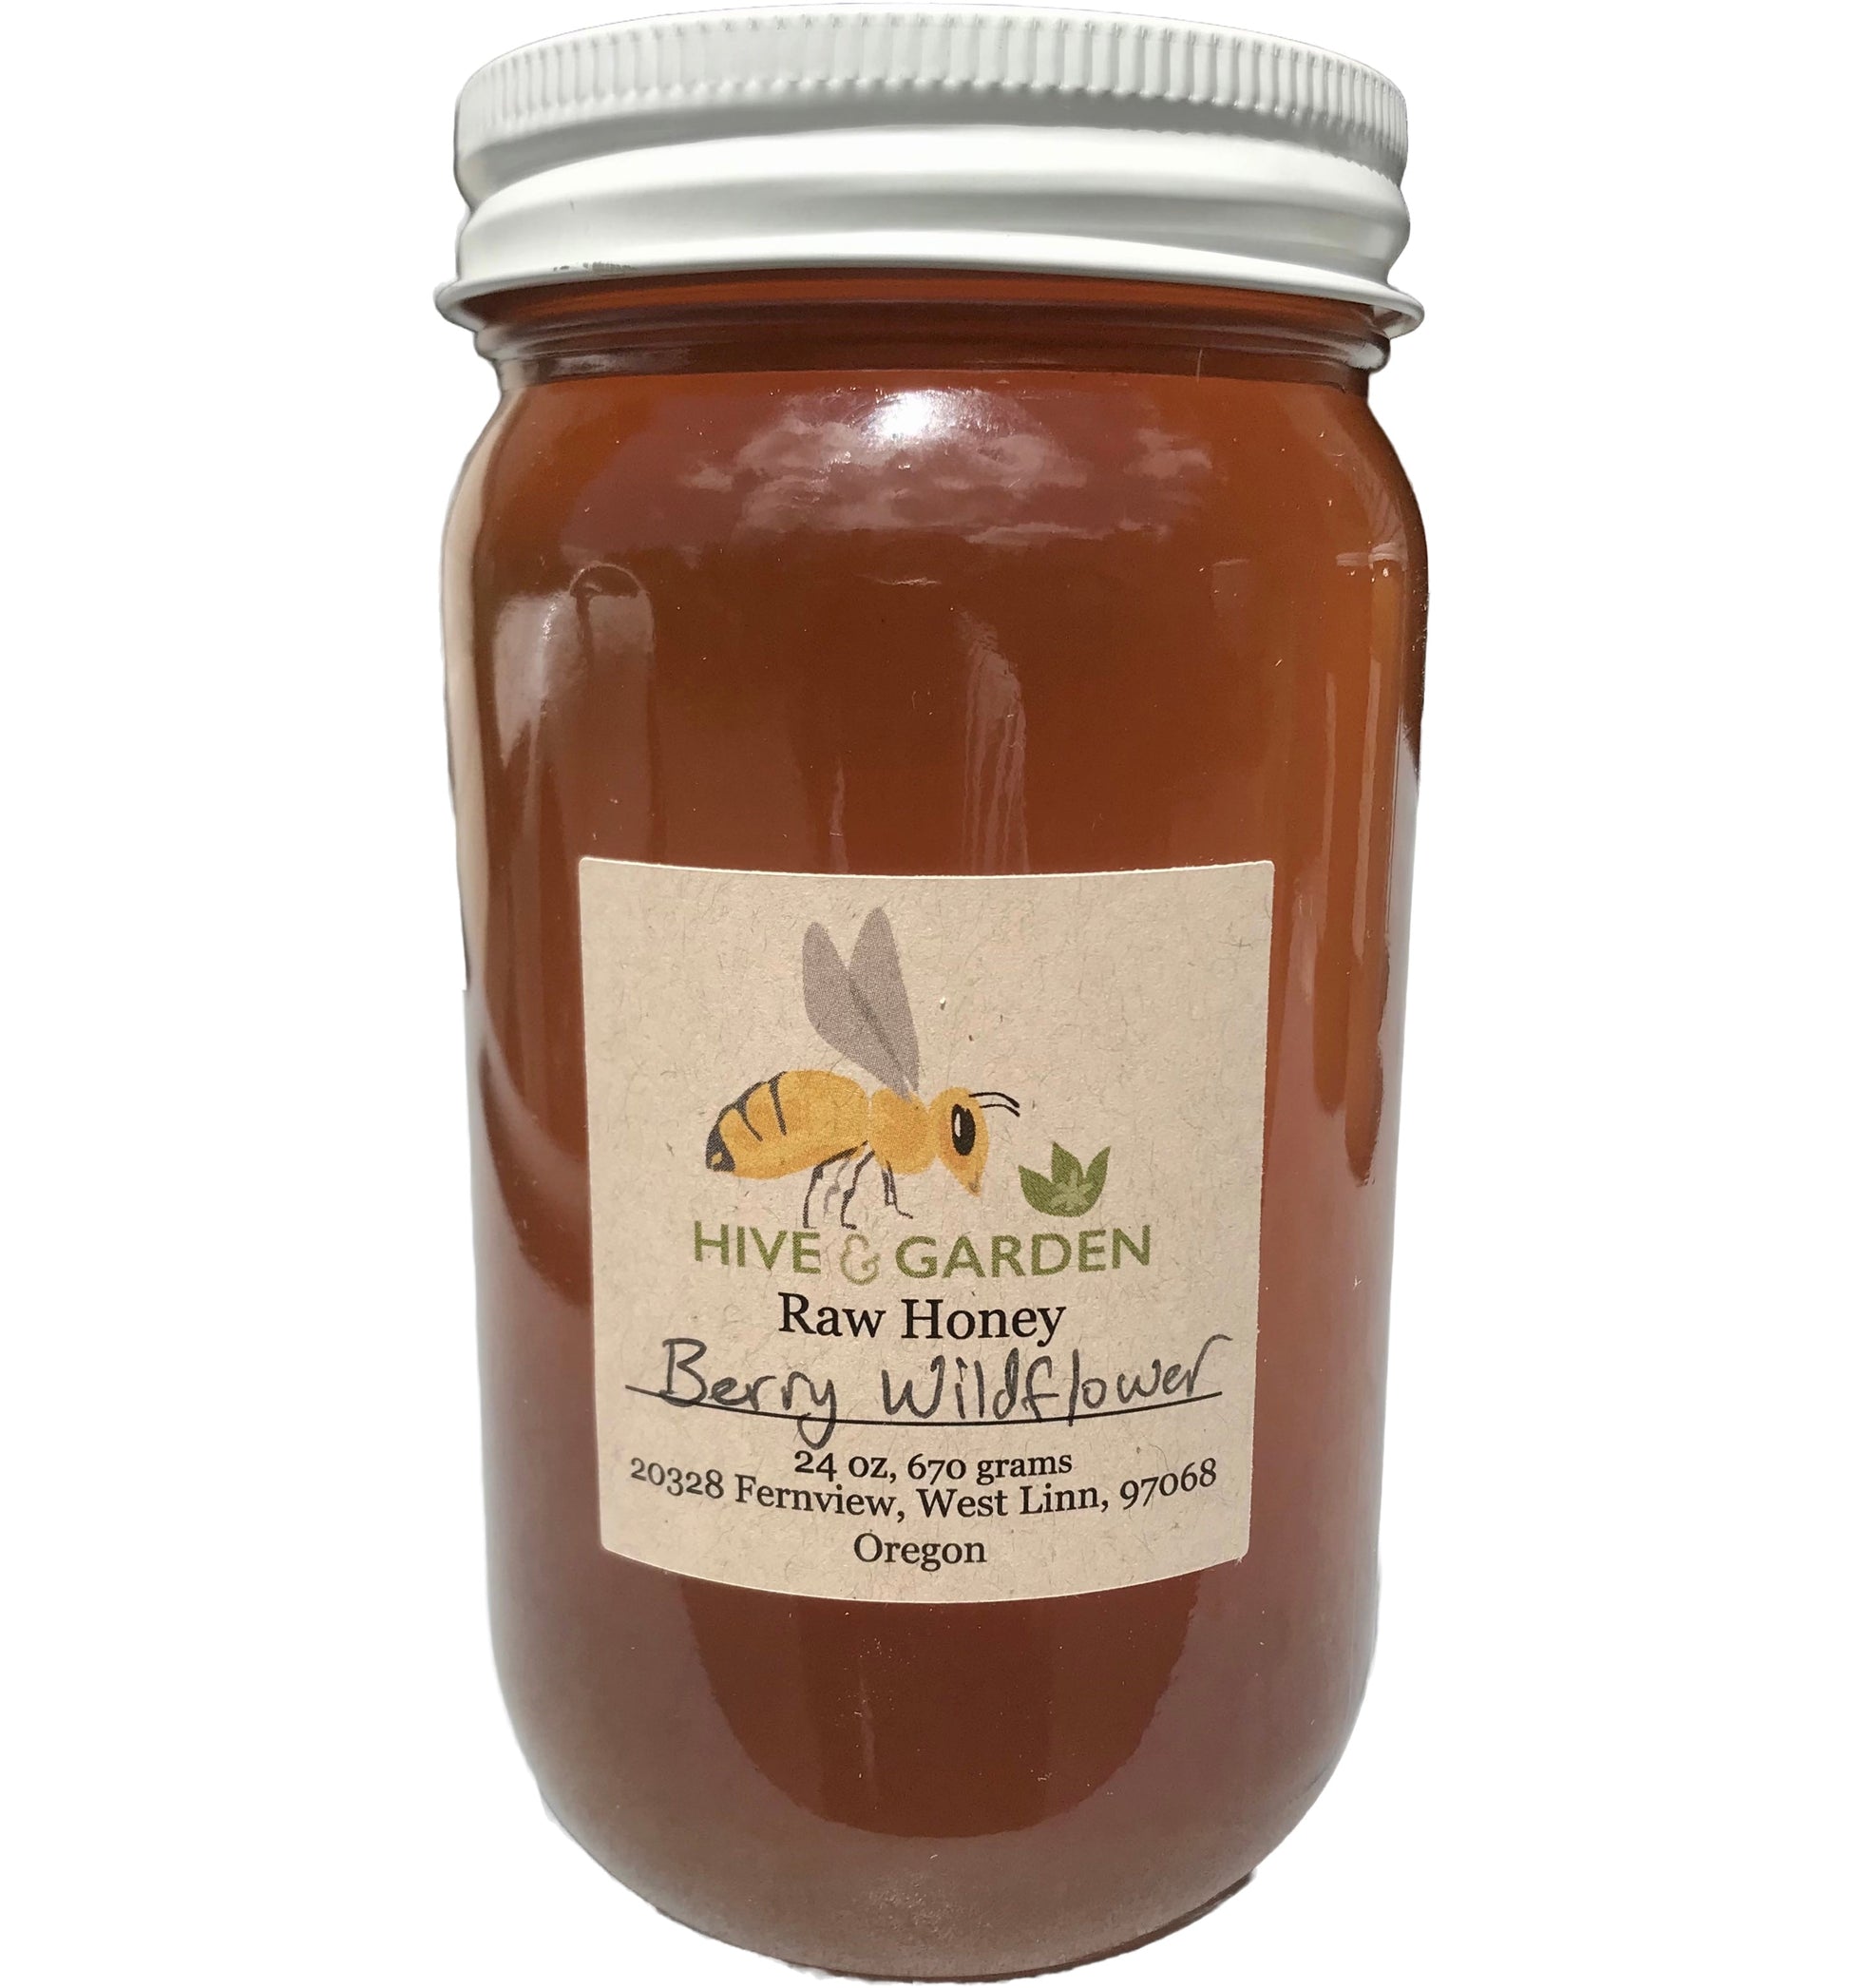 Willamette Berry Wildflower Honey